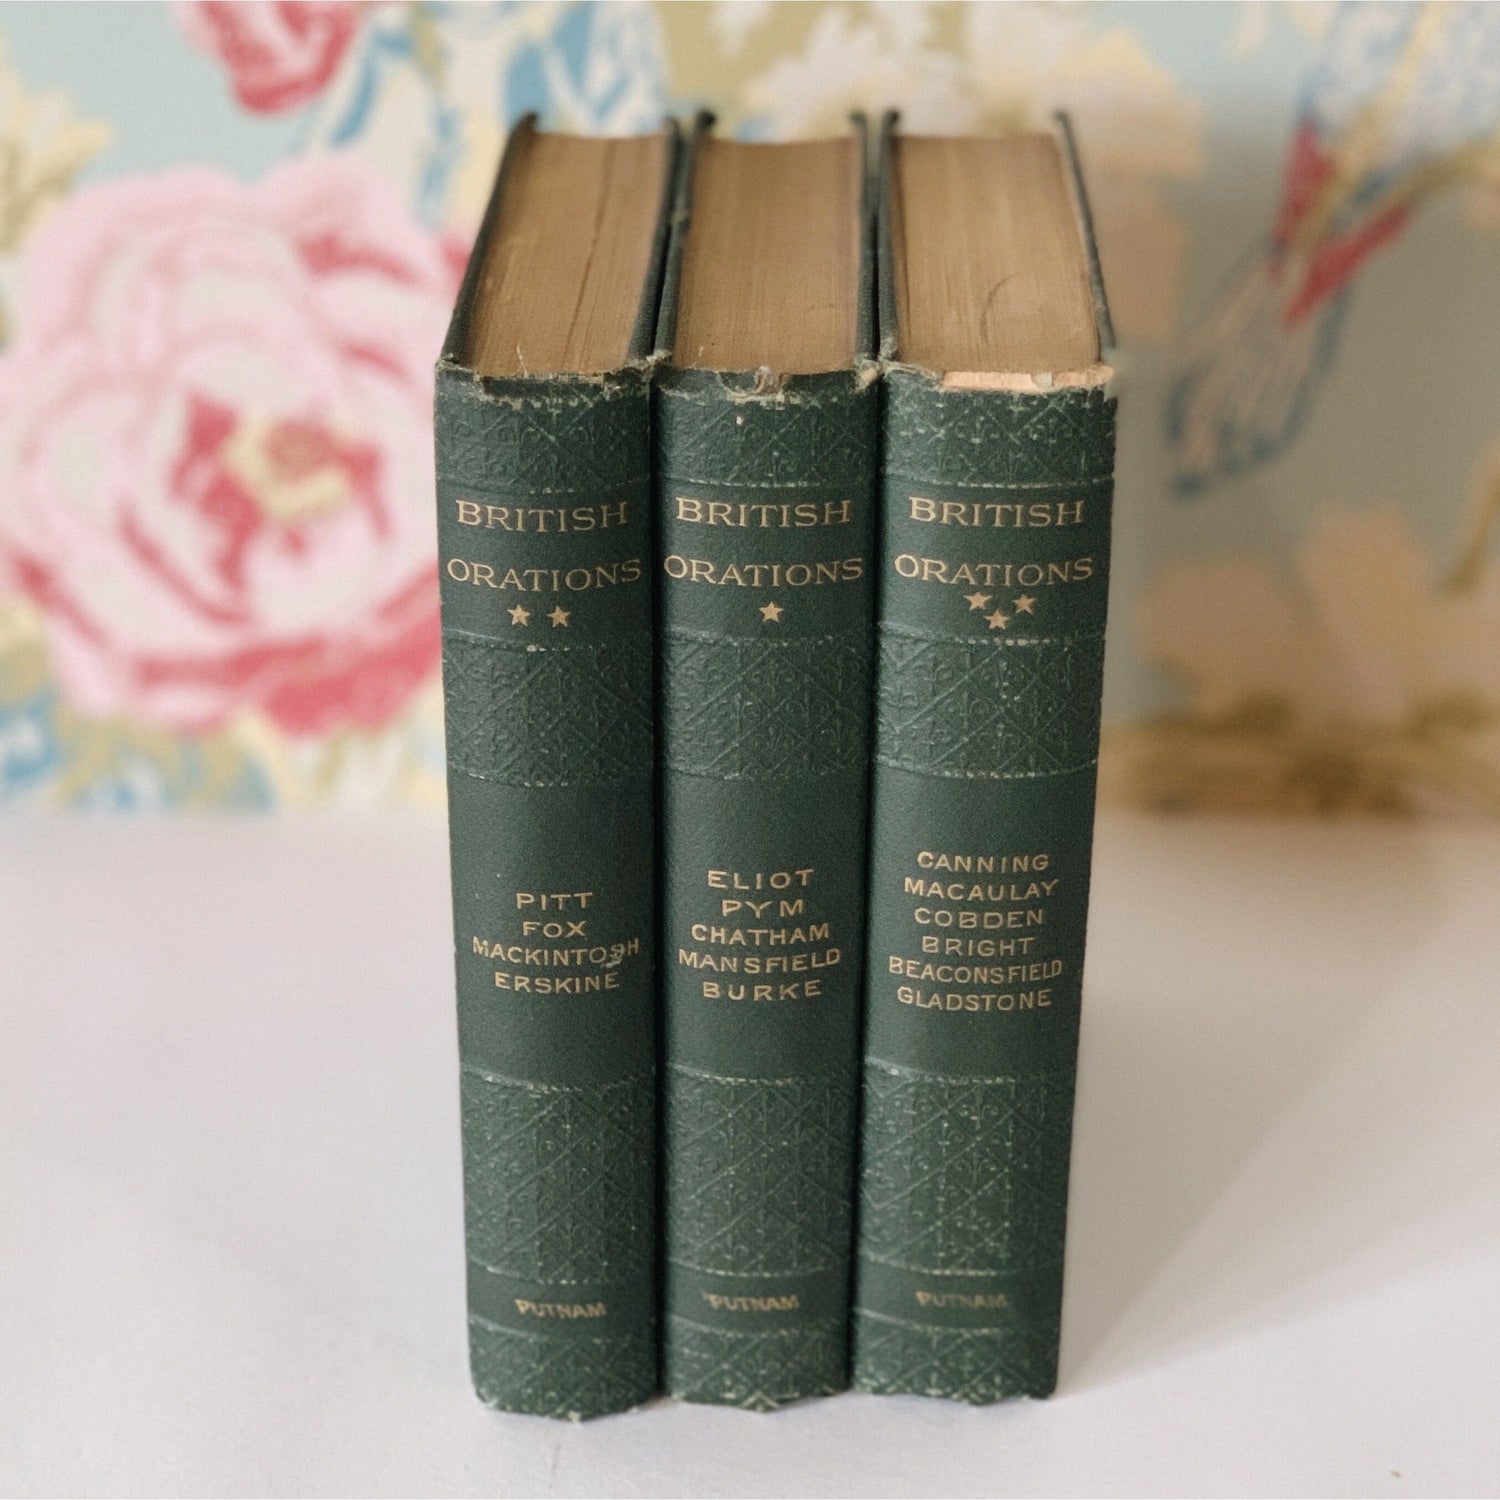 Representative British Orations, Antique Green Books for Shelf Styling, 1887